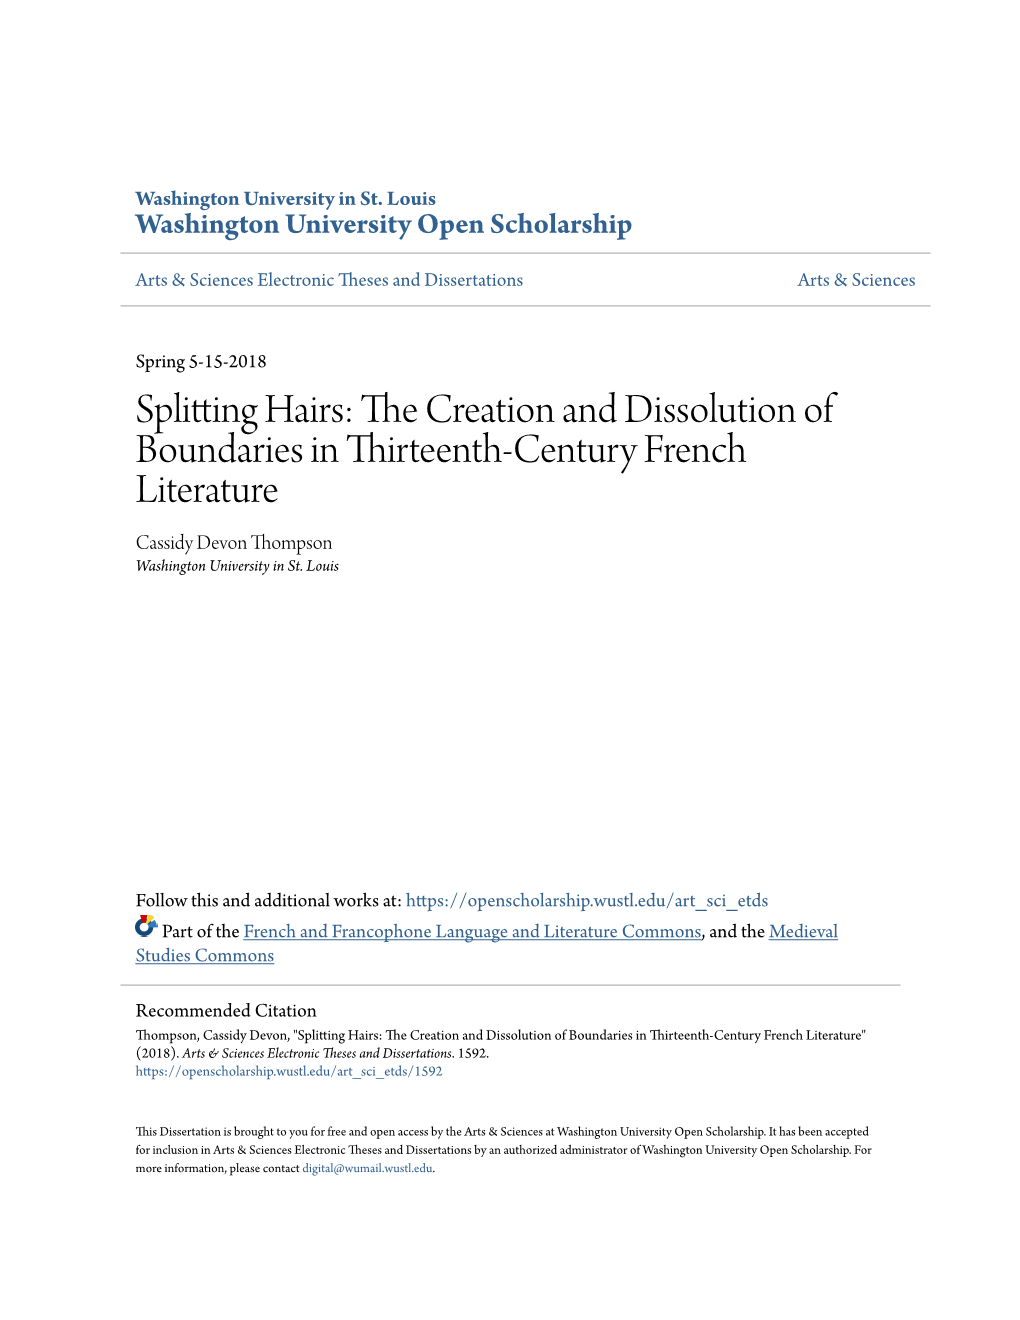 Splitting Hairs: the Rc Eation and Dissolution of Boundaries in Thirteenth-Century French Literature Cassidy Devon Thompson Washington University in St